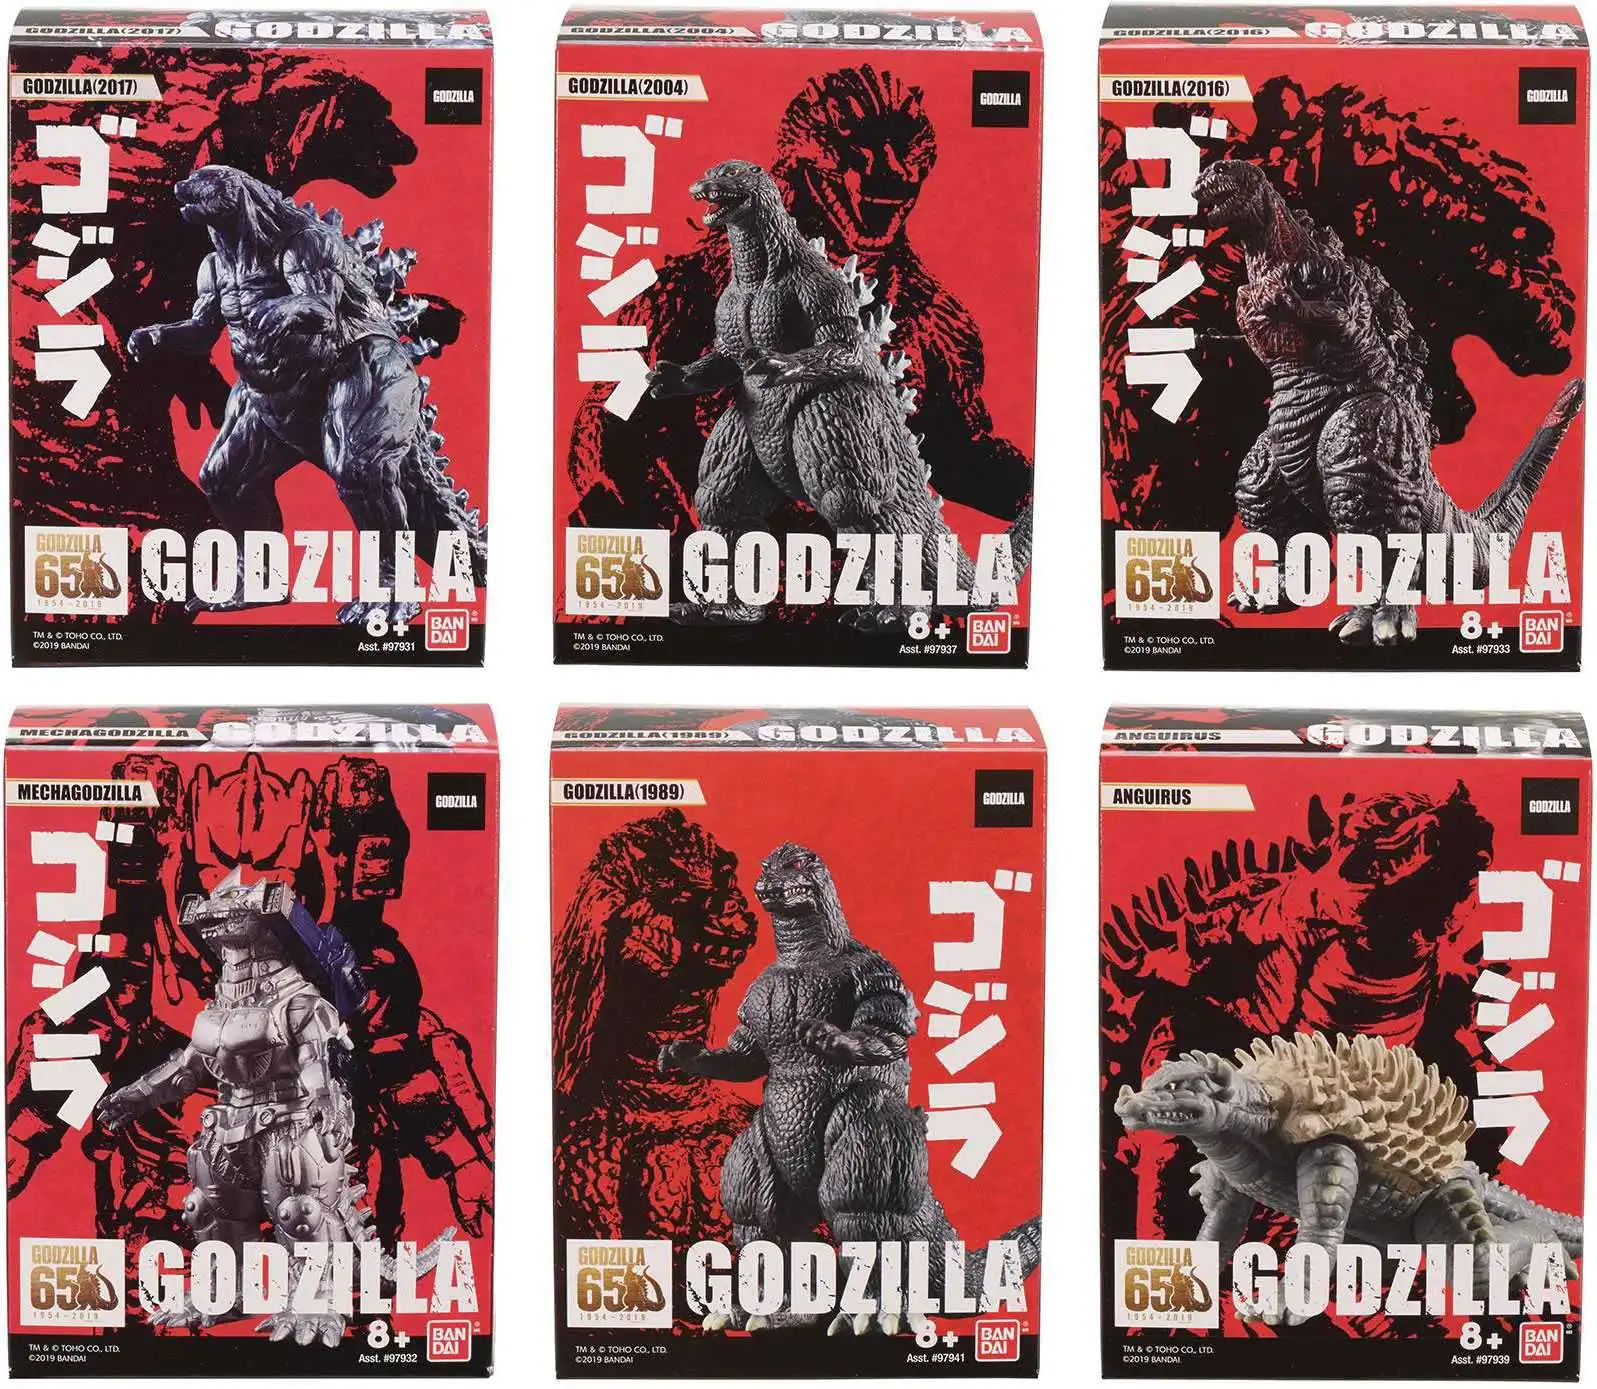 2019 Bandai Godzilla 65th Ann 2016 Shin Final Form 3.5in Mini Figure for sale online 